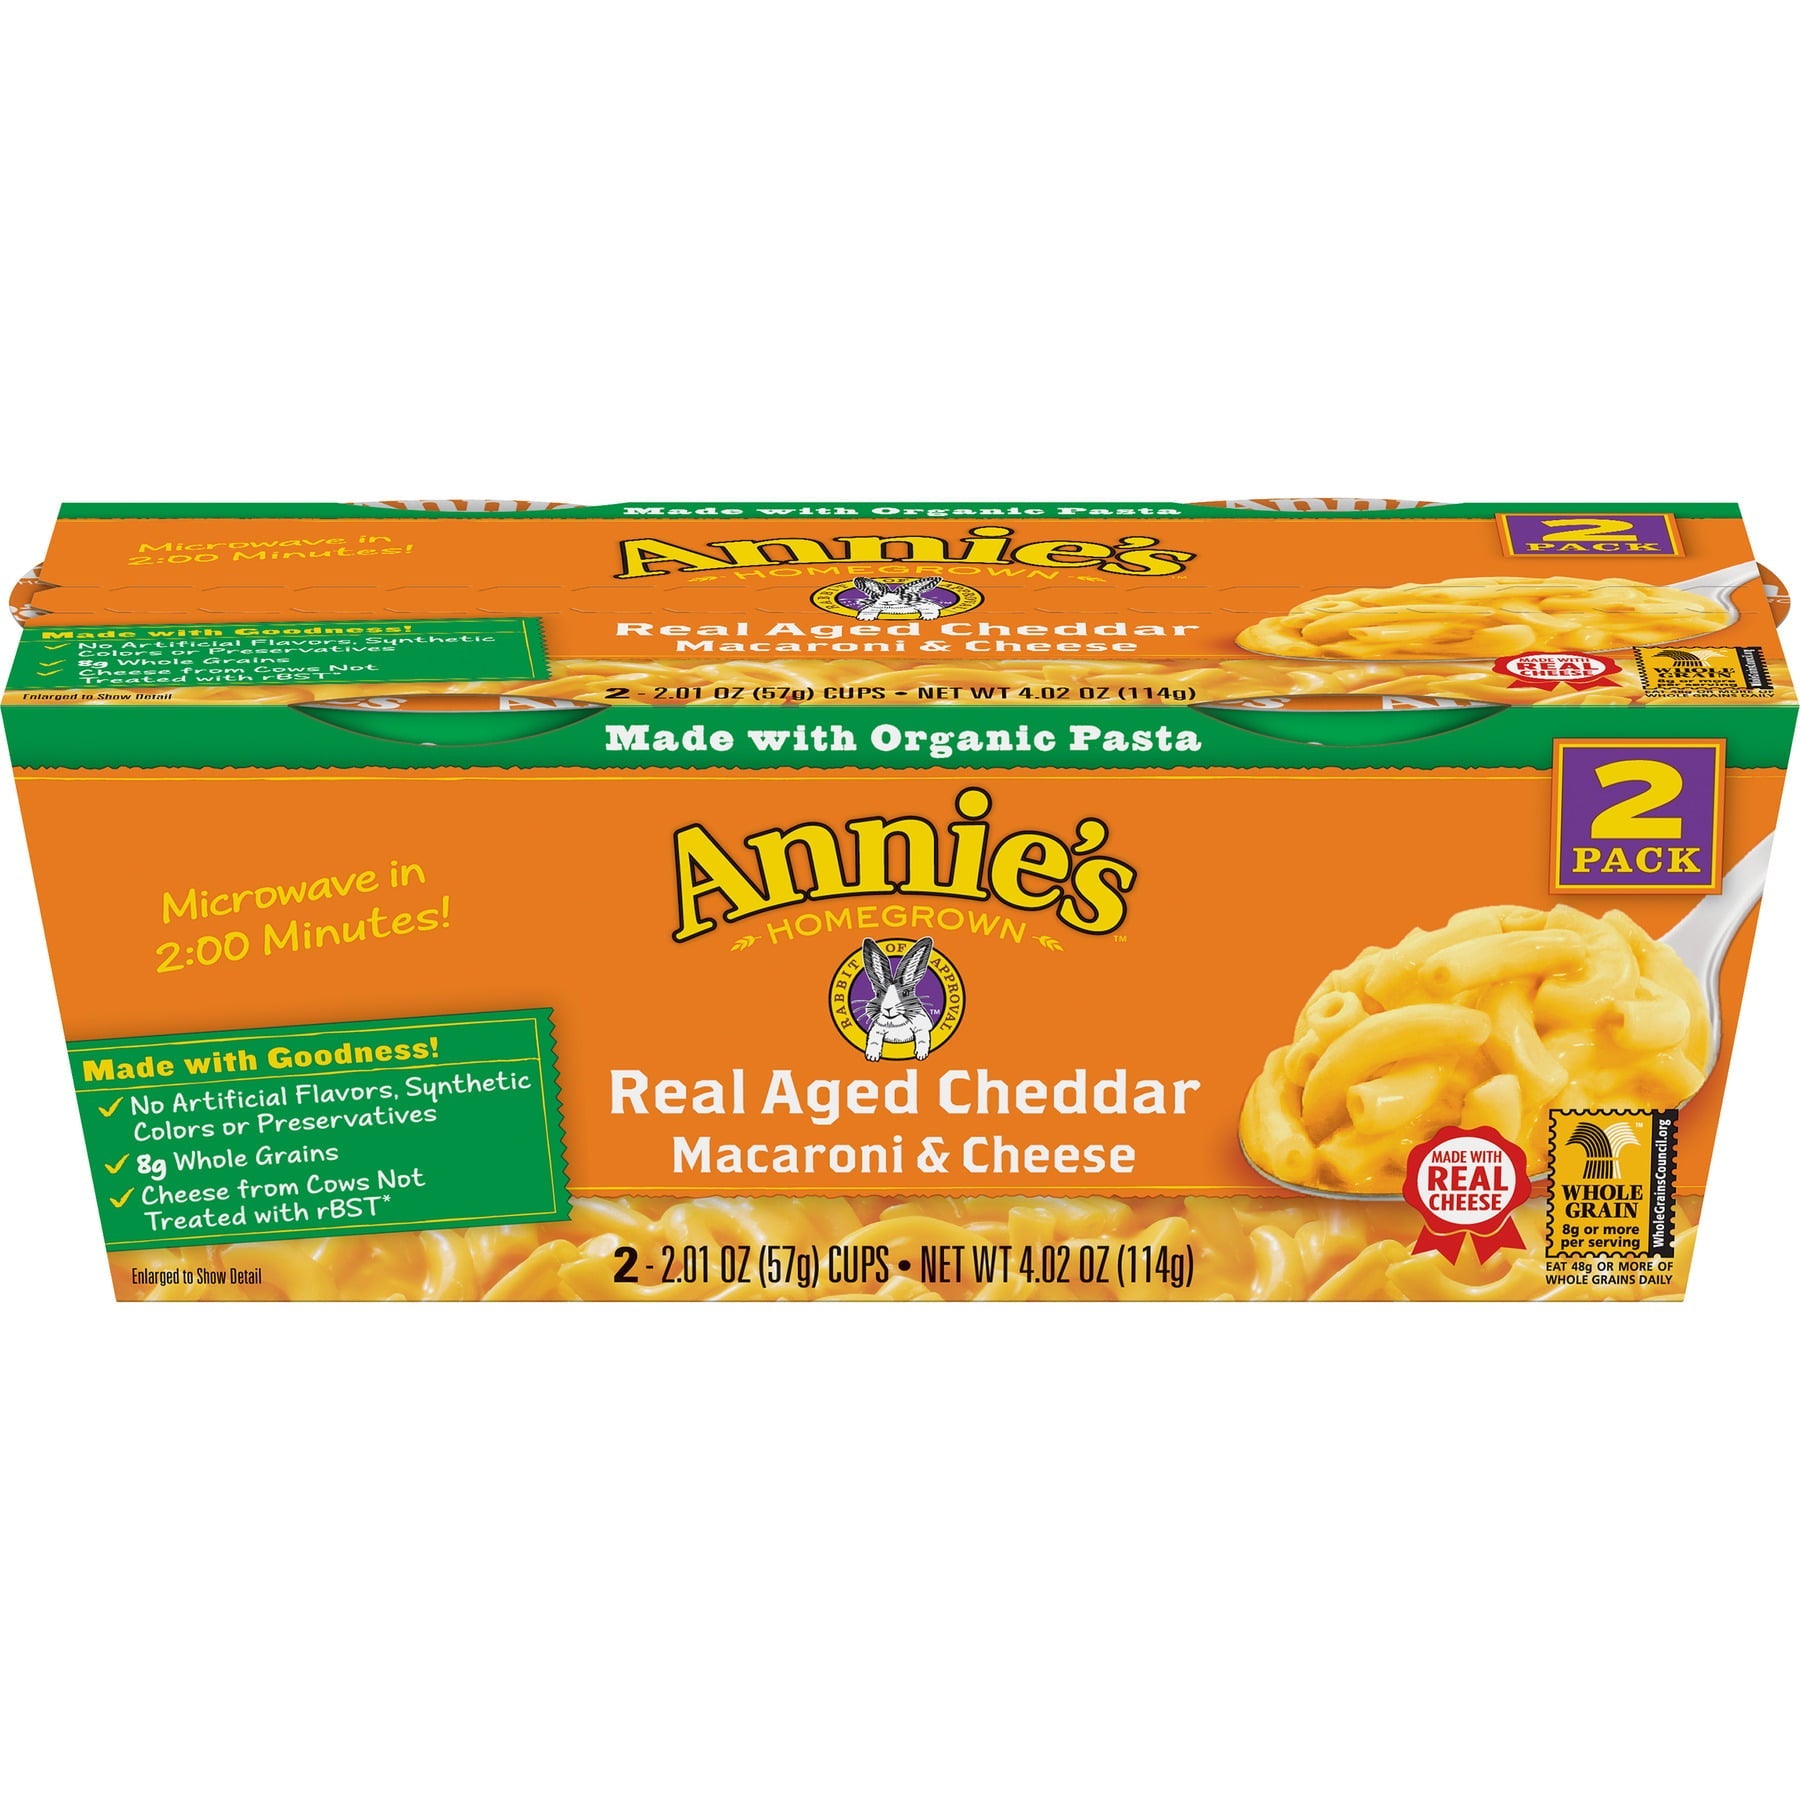 Annies Real Aged Cheddar Macaroni & Cheese 2.01 Oz